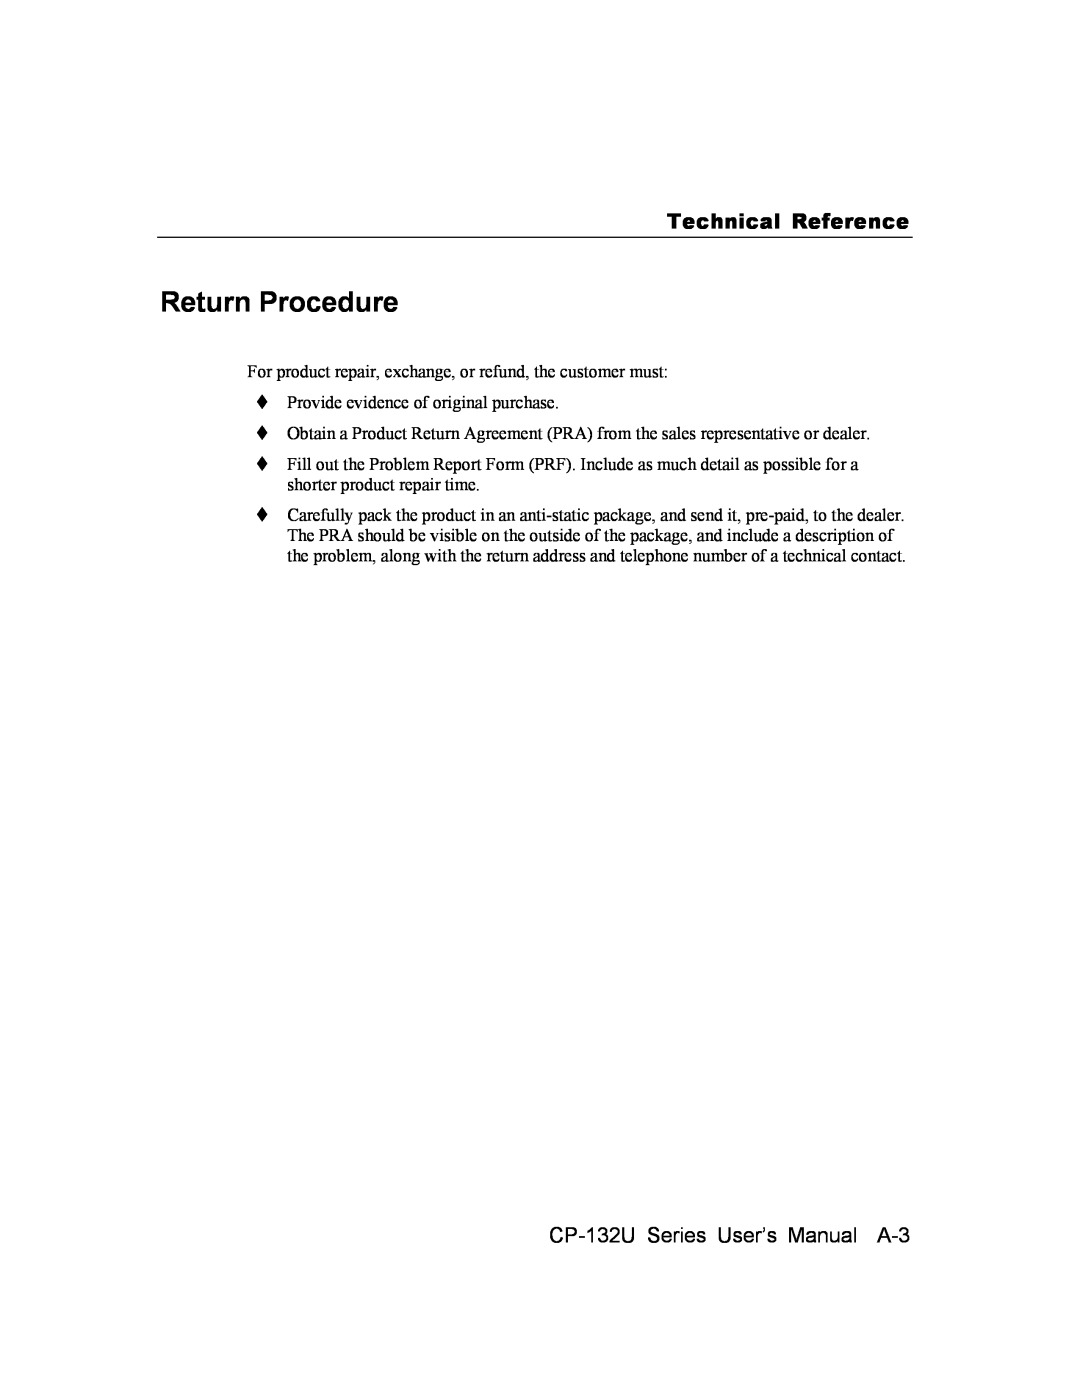 Moxa Technologies user manual Return Procedure, CP-132U Series User’s Manual A-3, Technical Reference 